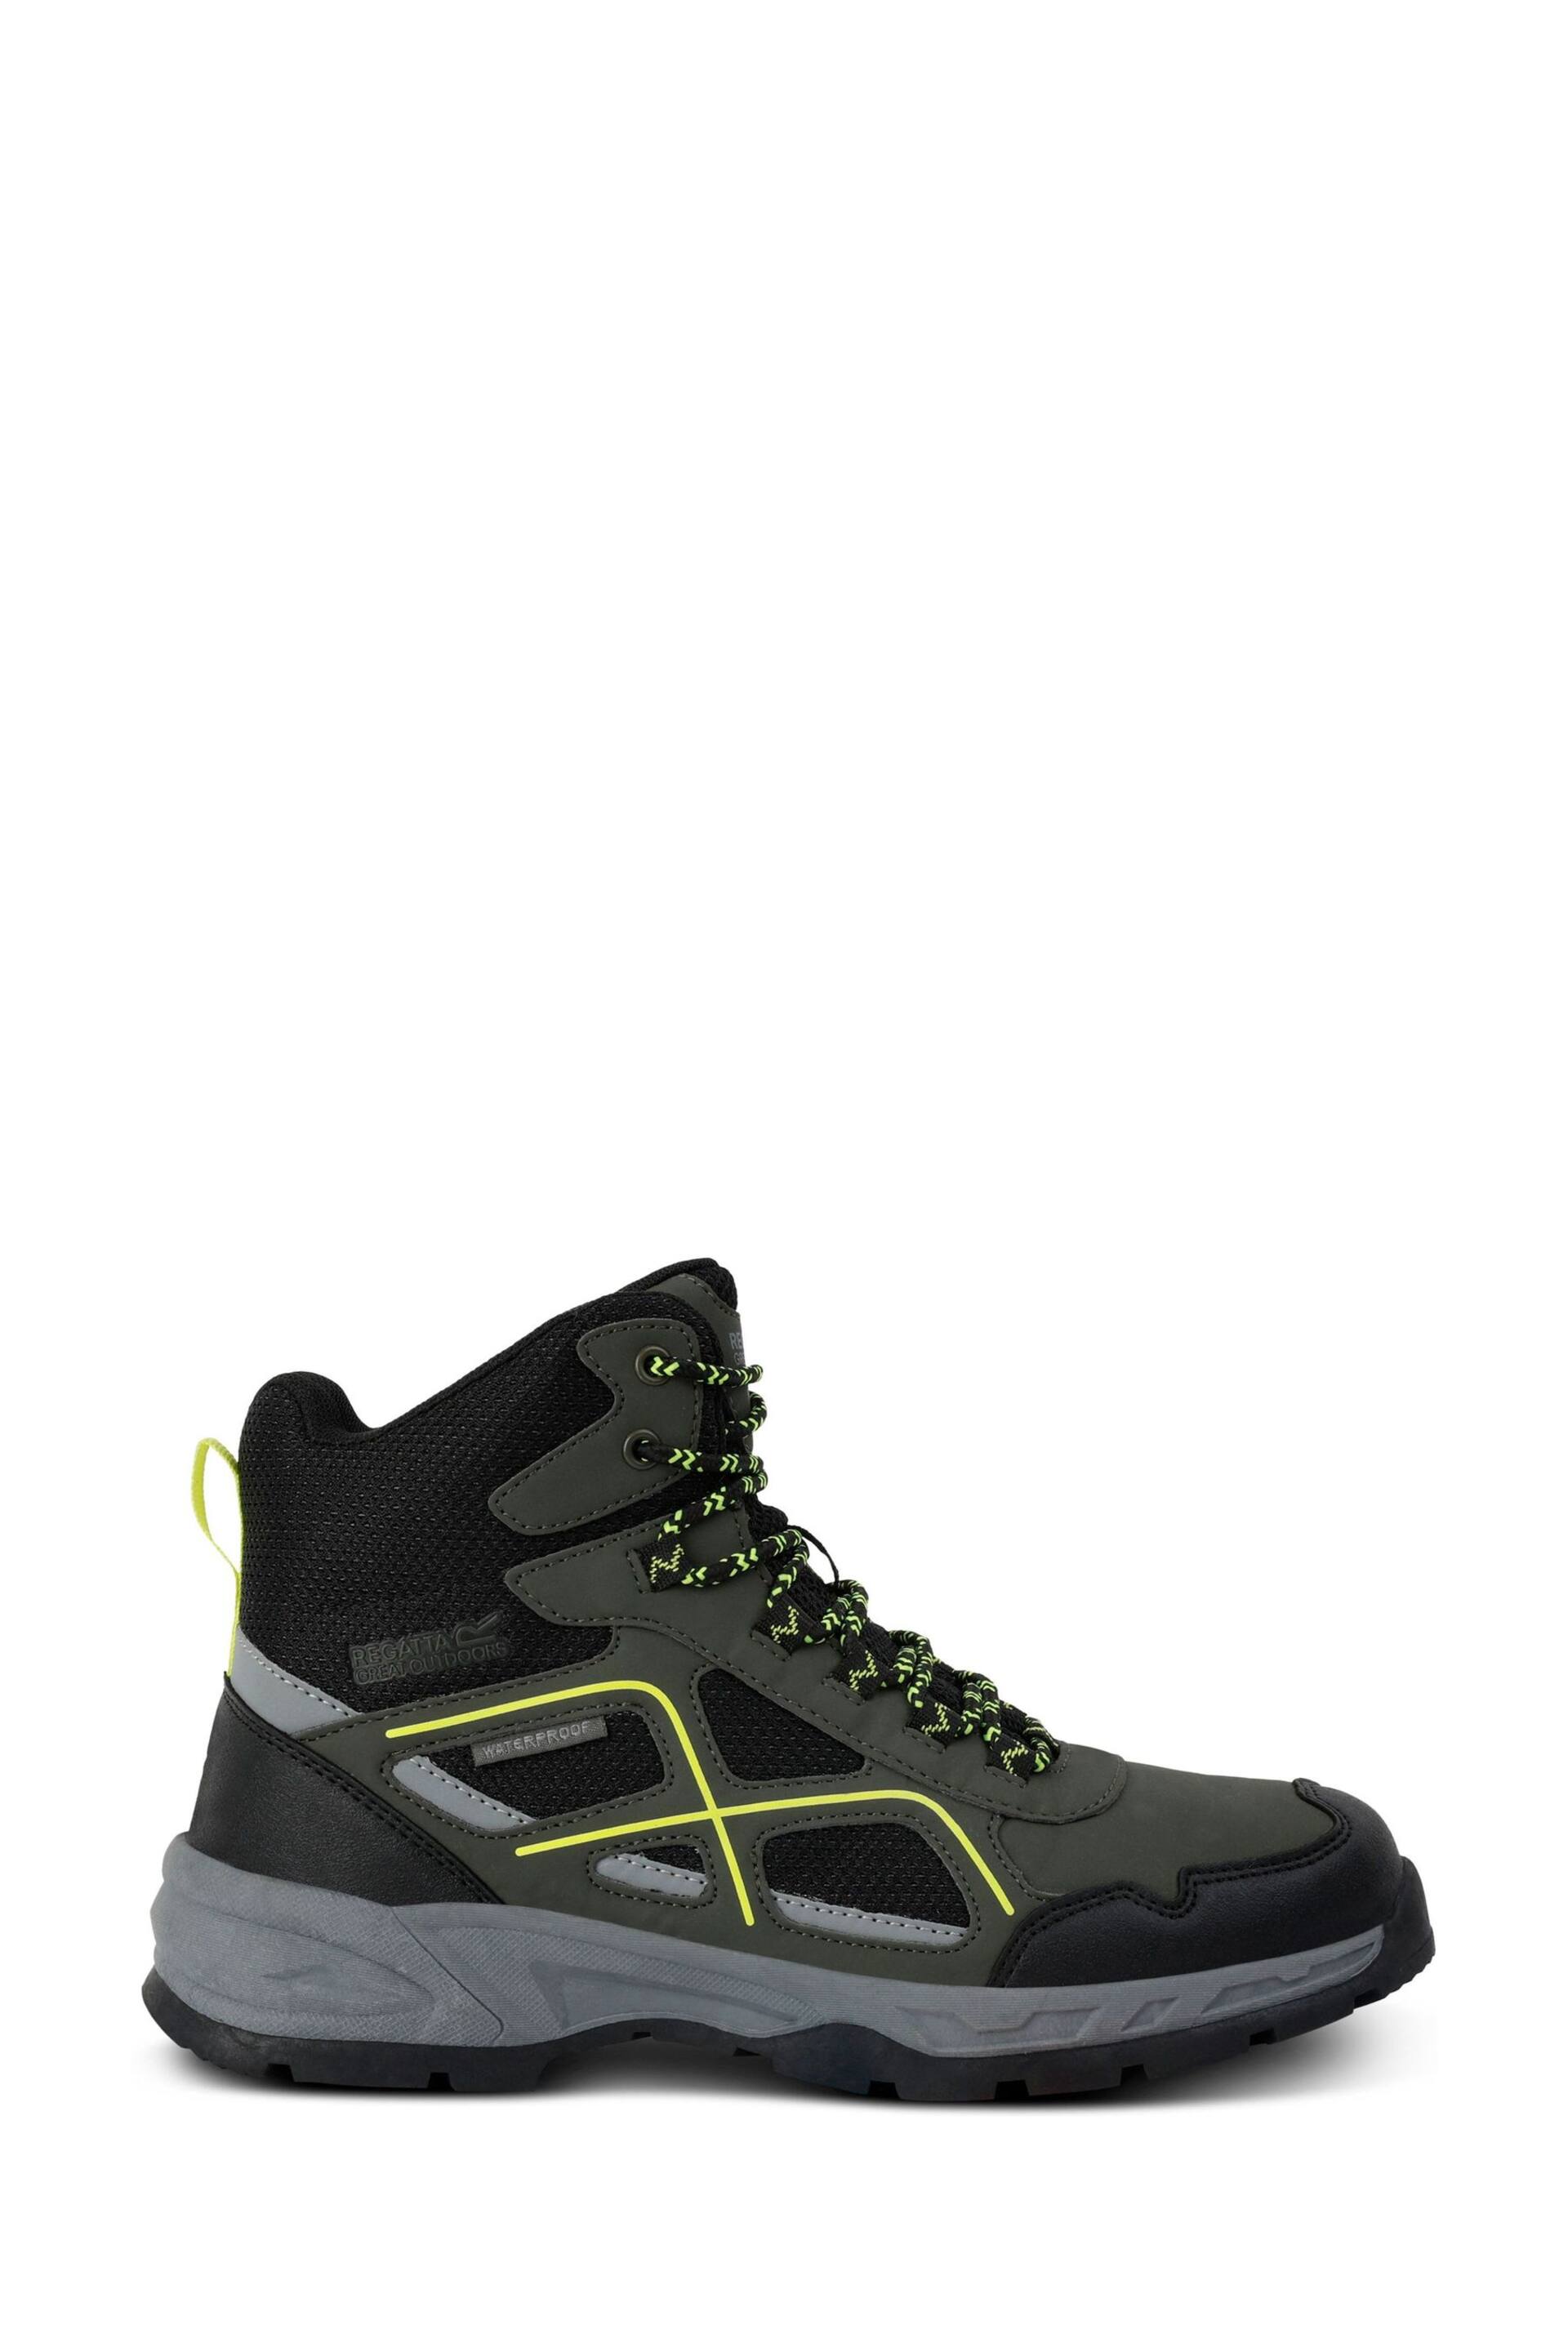 Regatta Green Vendeavour Waterproof Hiking Boots - Image 4 of 5